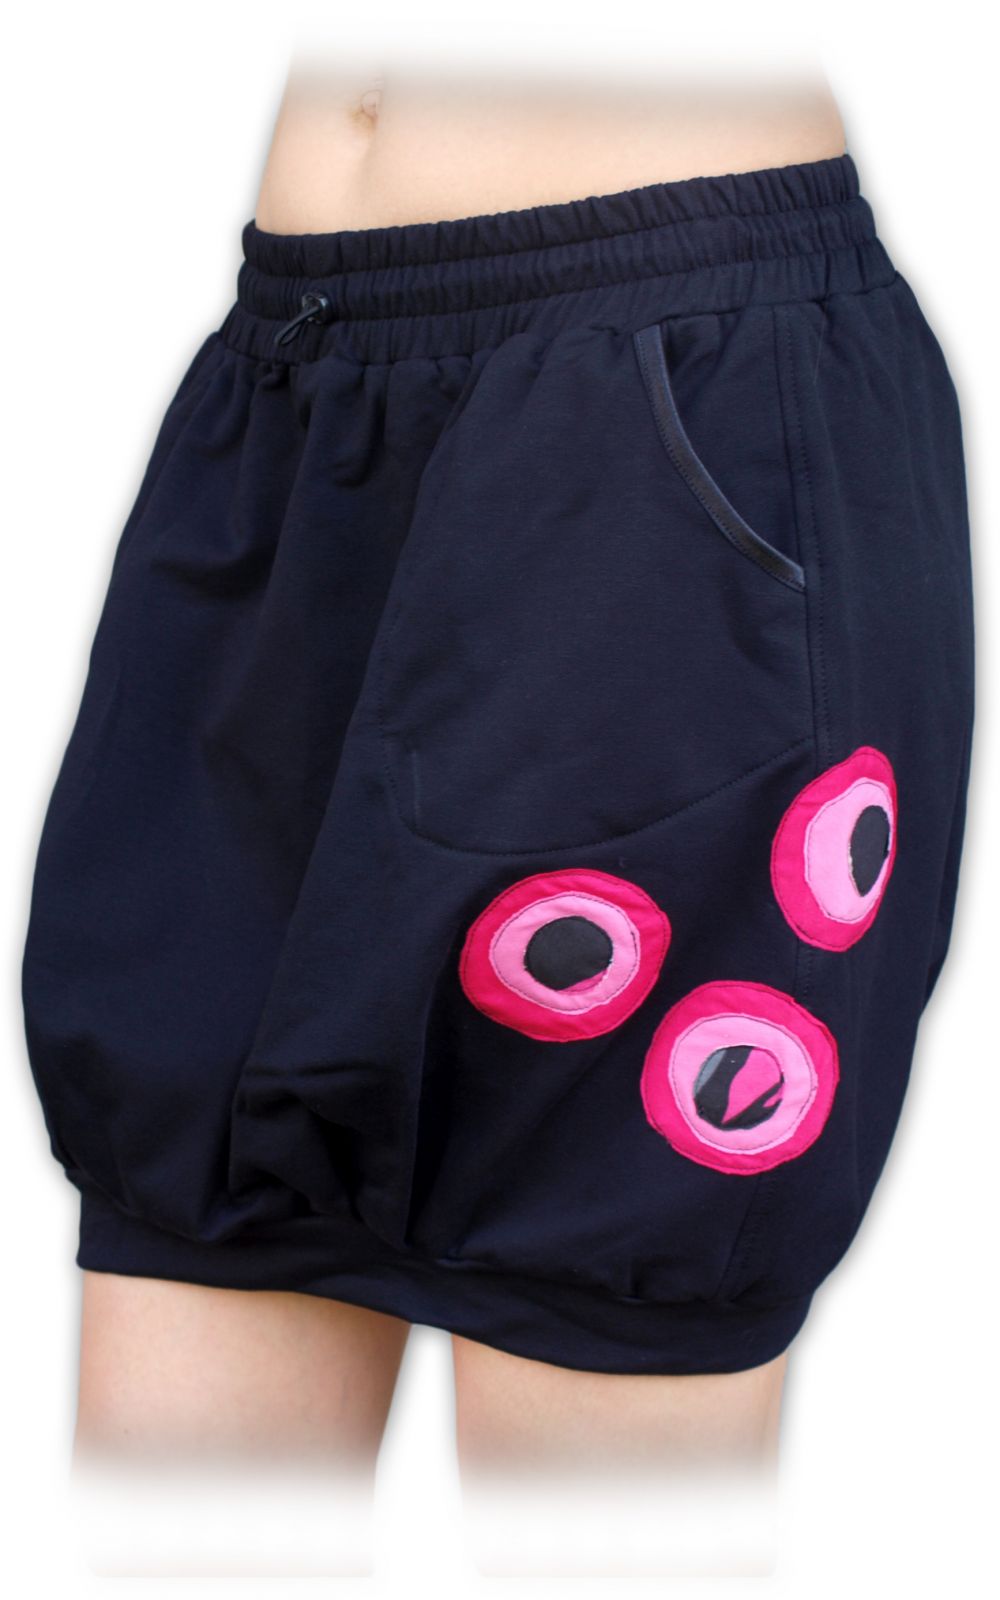 Maternity skirt Tamara, black with pink aplication ( circlets )